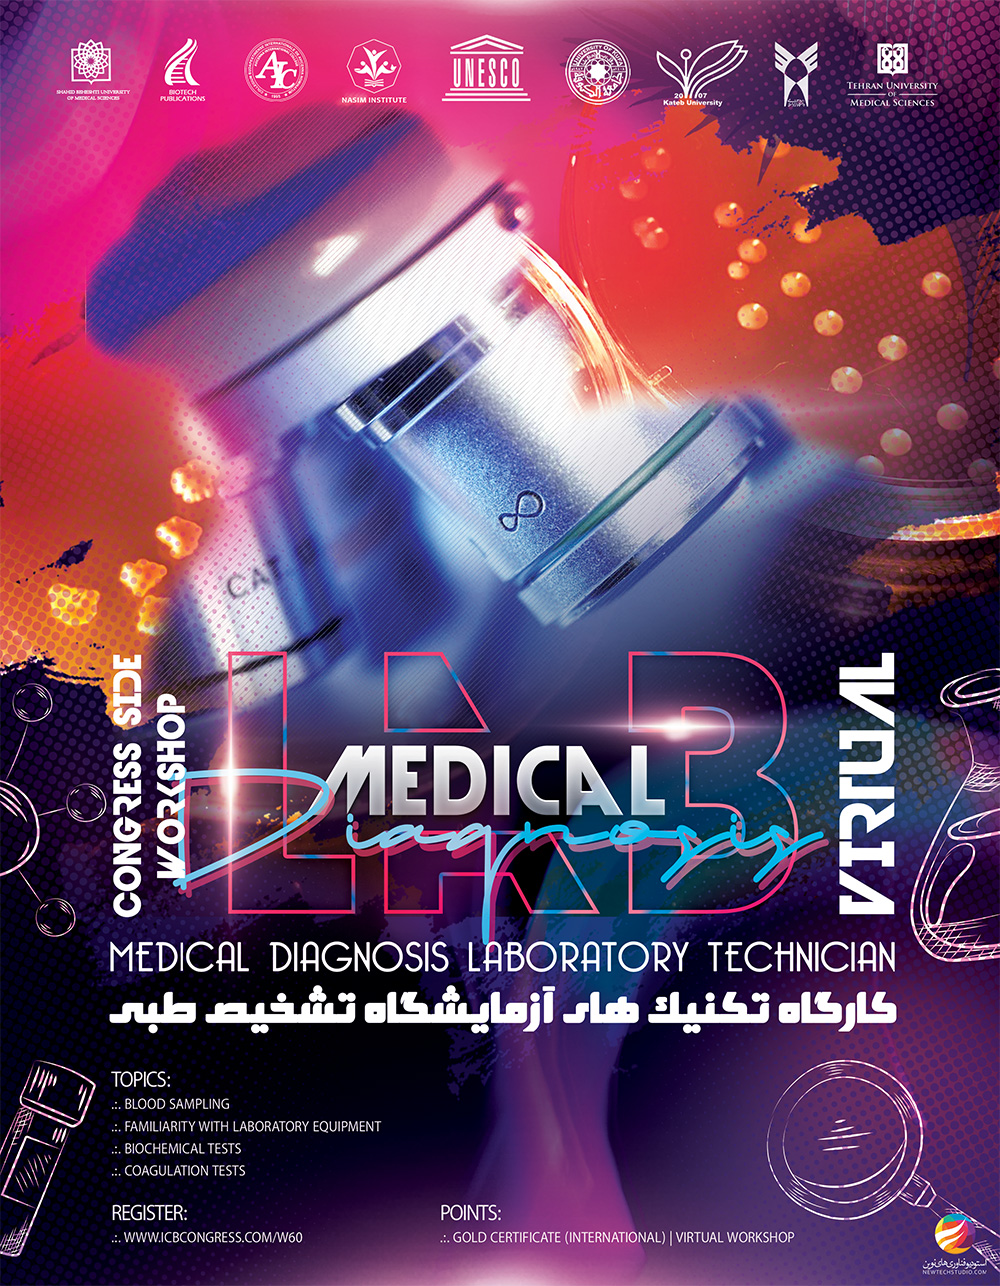 Medical Diagnosis Laboratory Technician